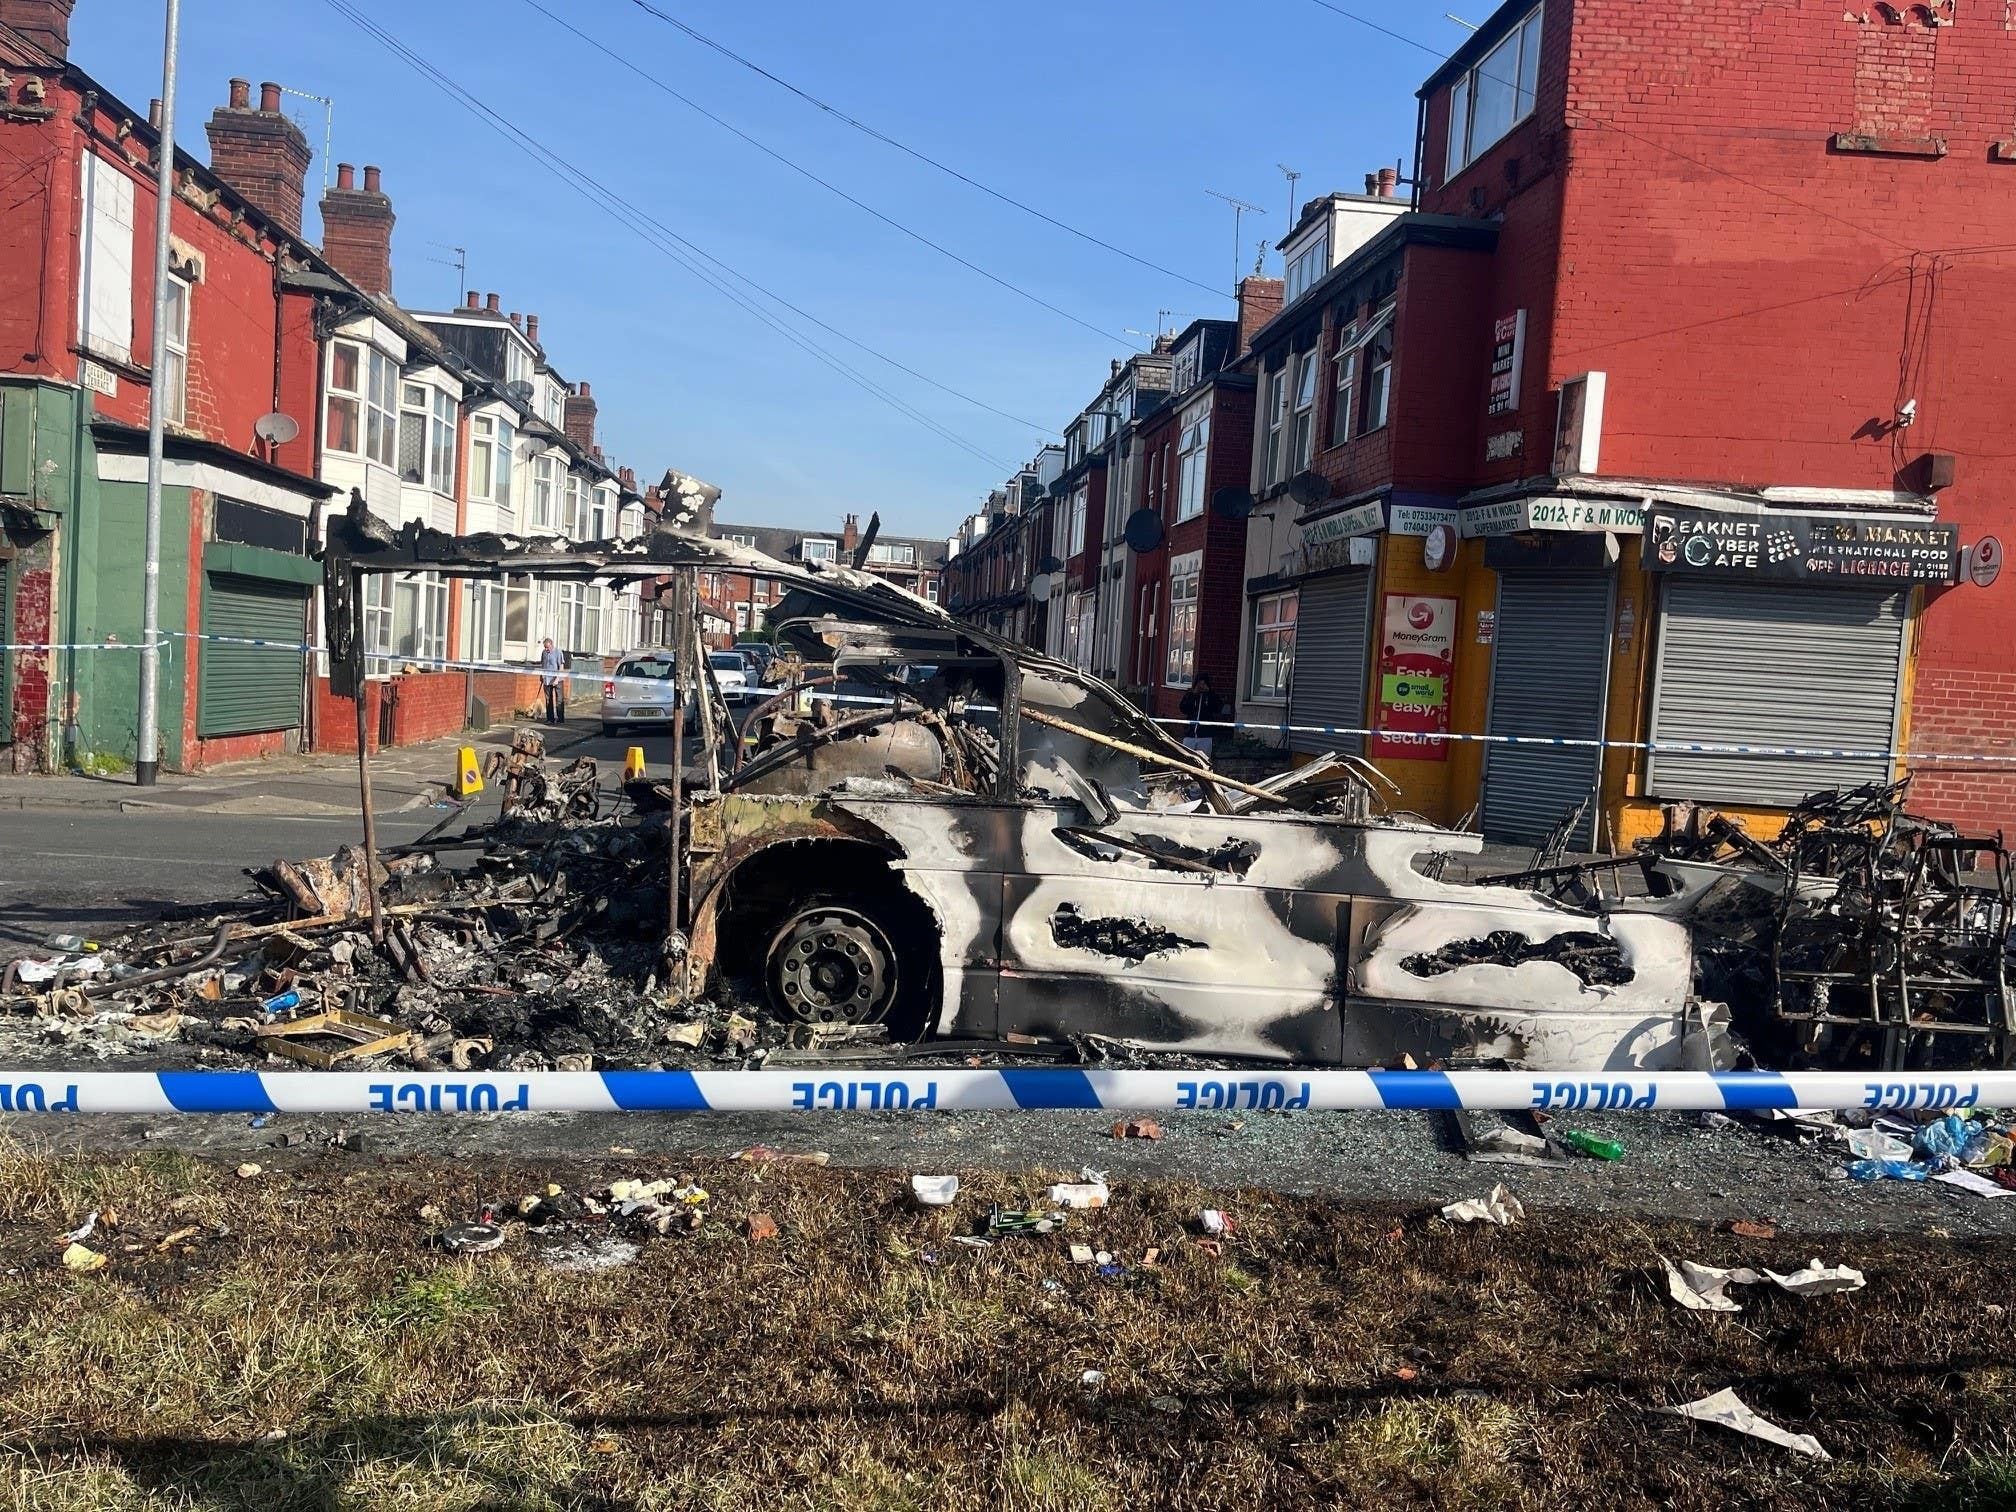 Councillor demands arrests over Leeds riot as locals fear more disorder